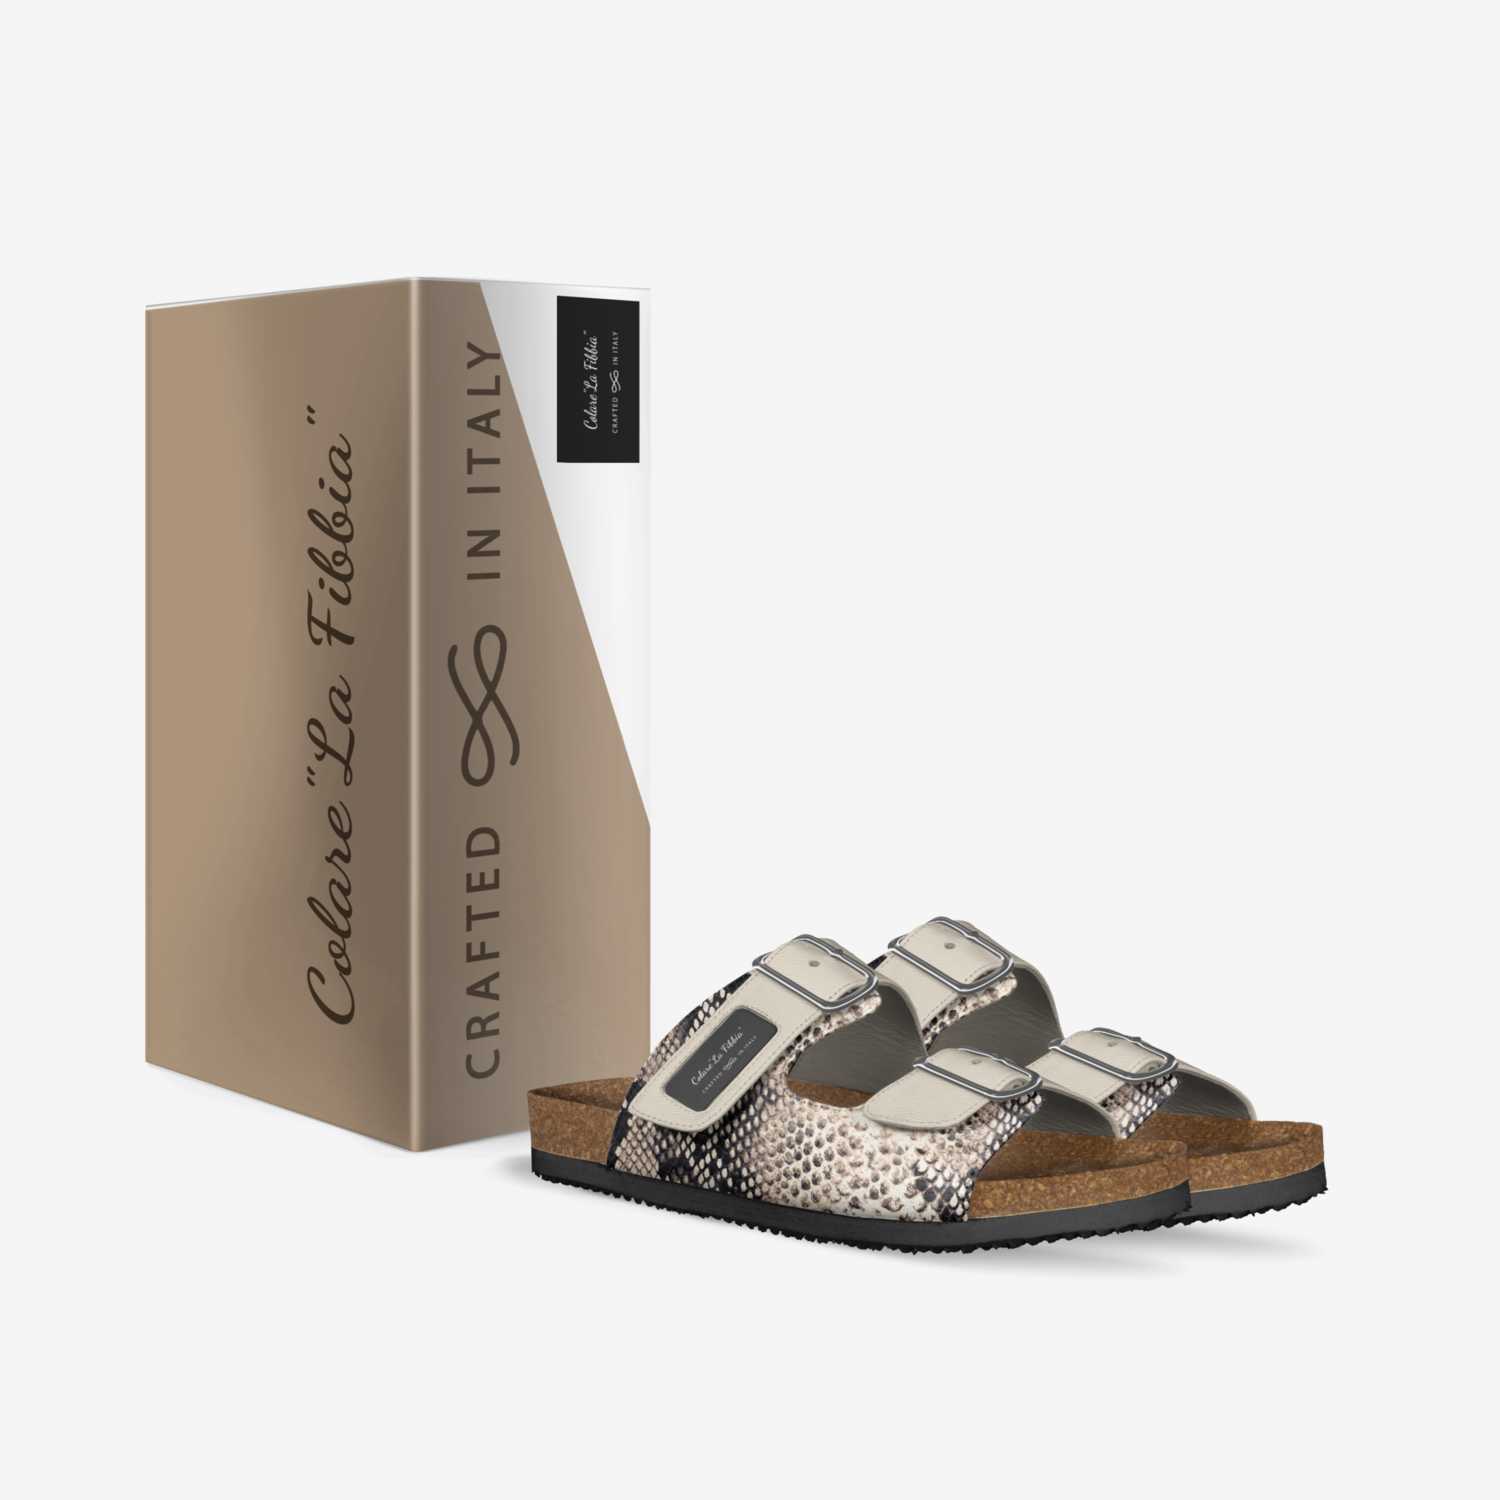 Colare"La Fibbia" custom made in Italy shoes by Colare . | Box view